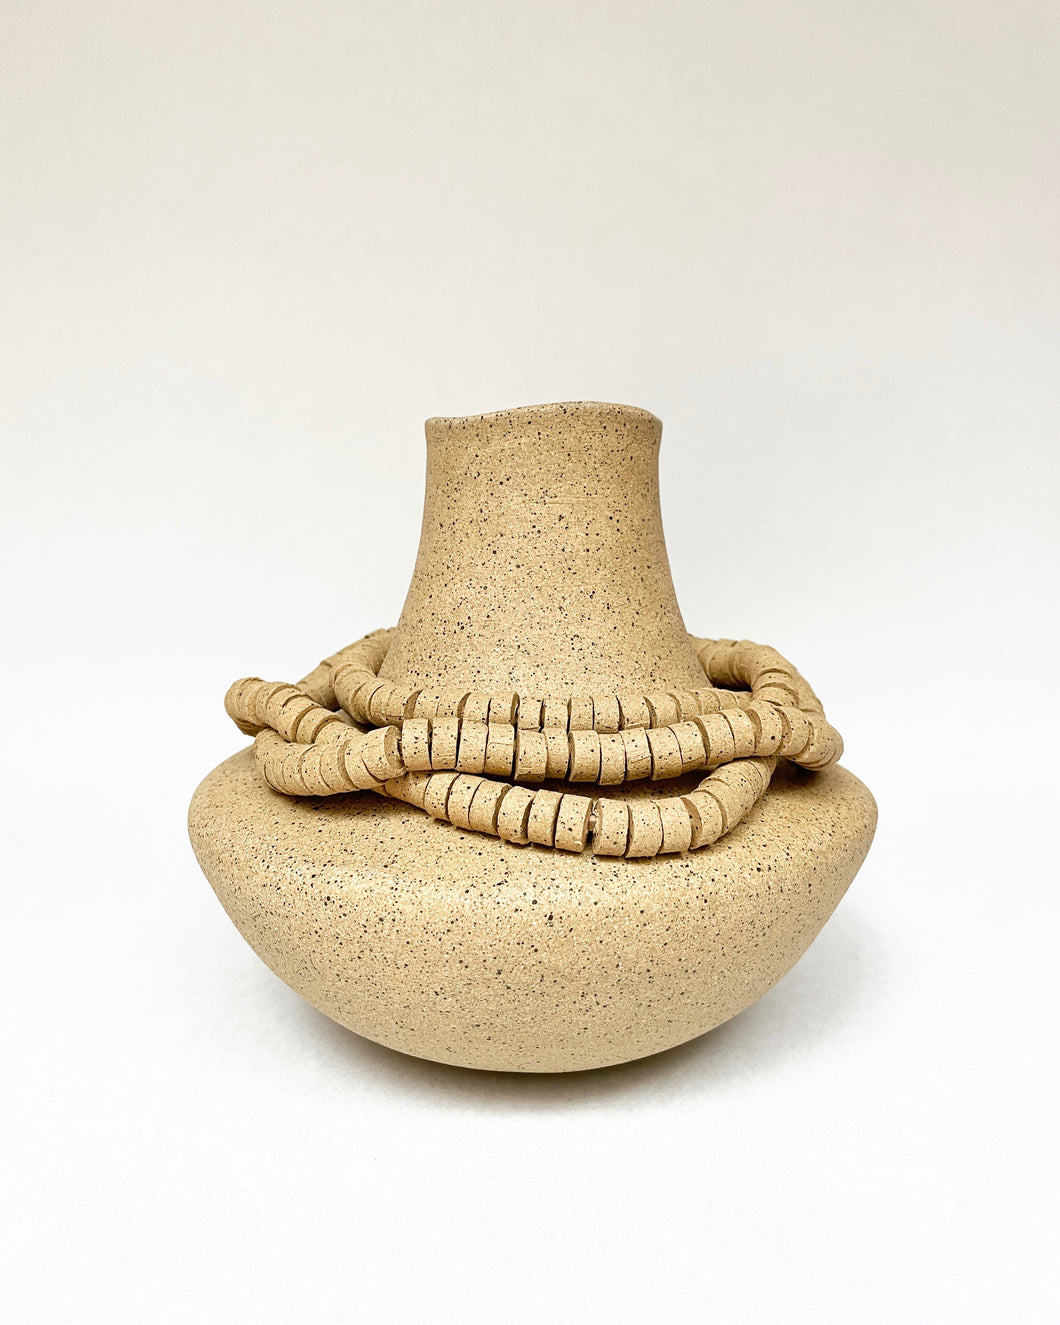 Handbuilt vase with beads